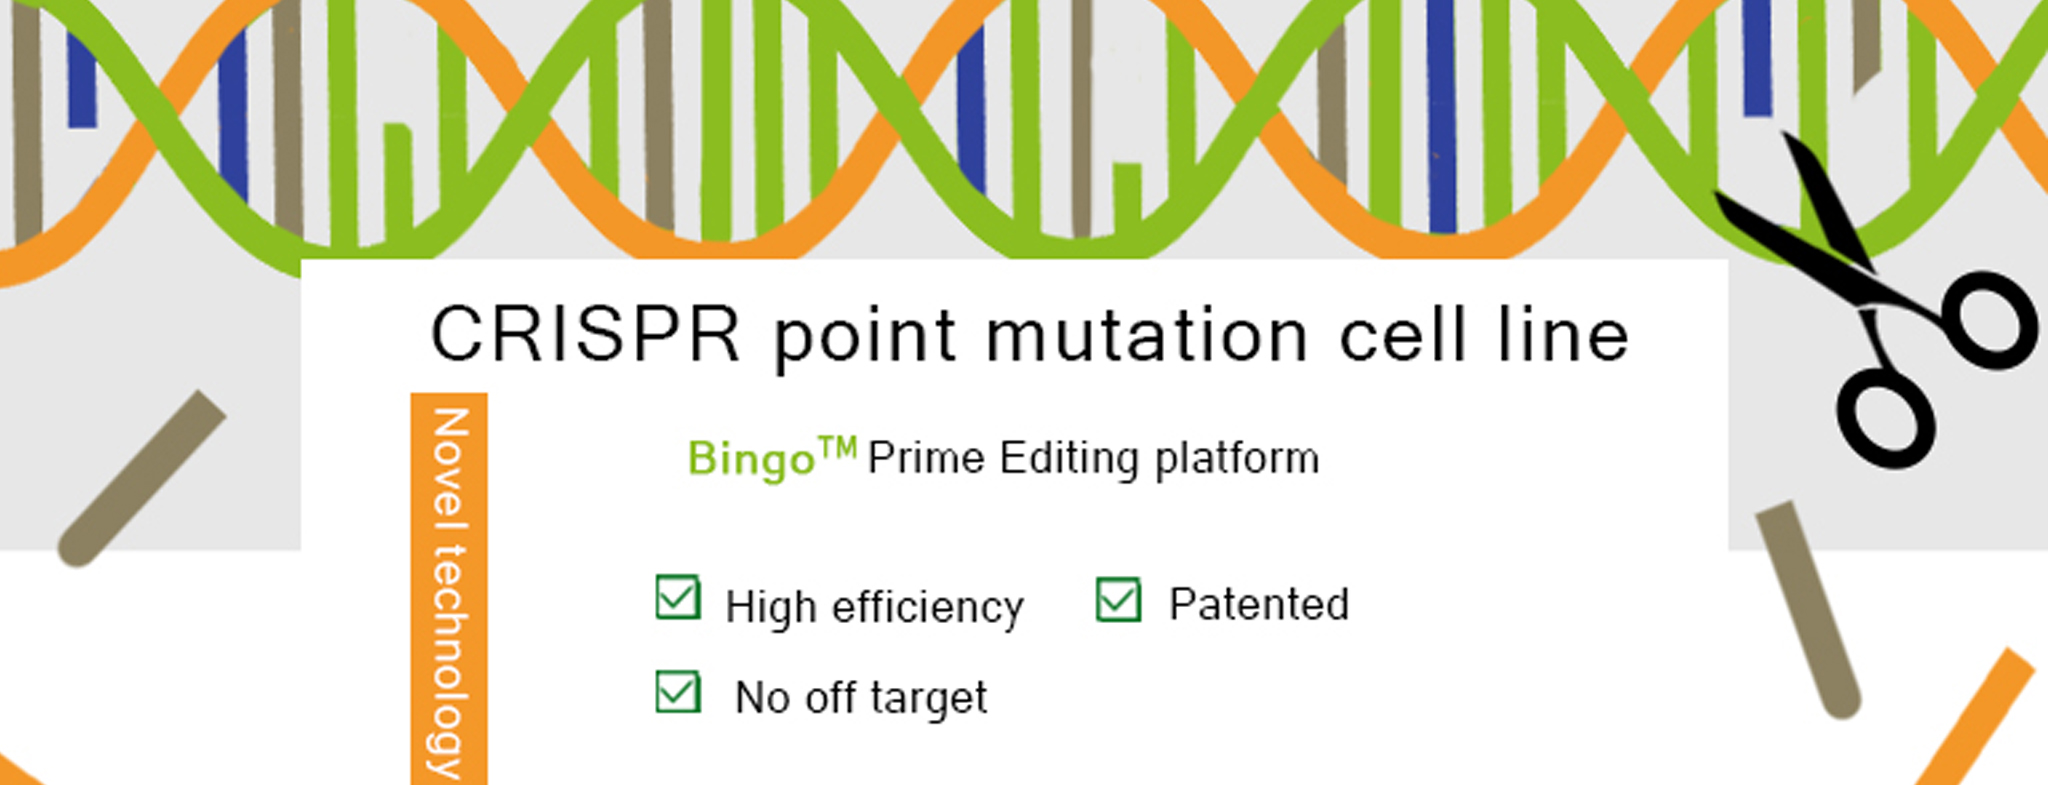 CRISPR point mutation cell line